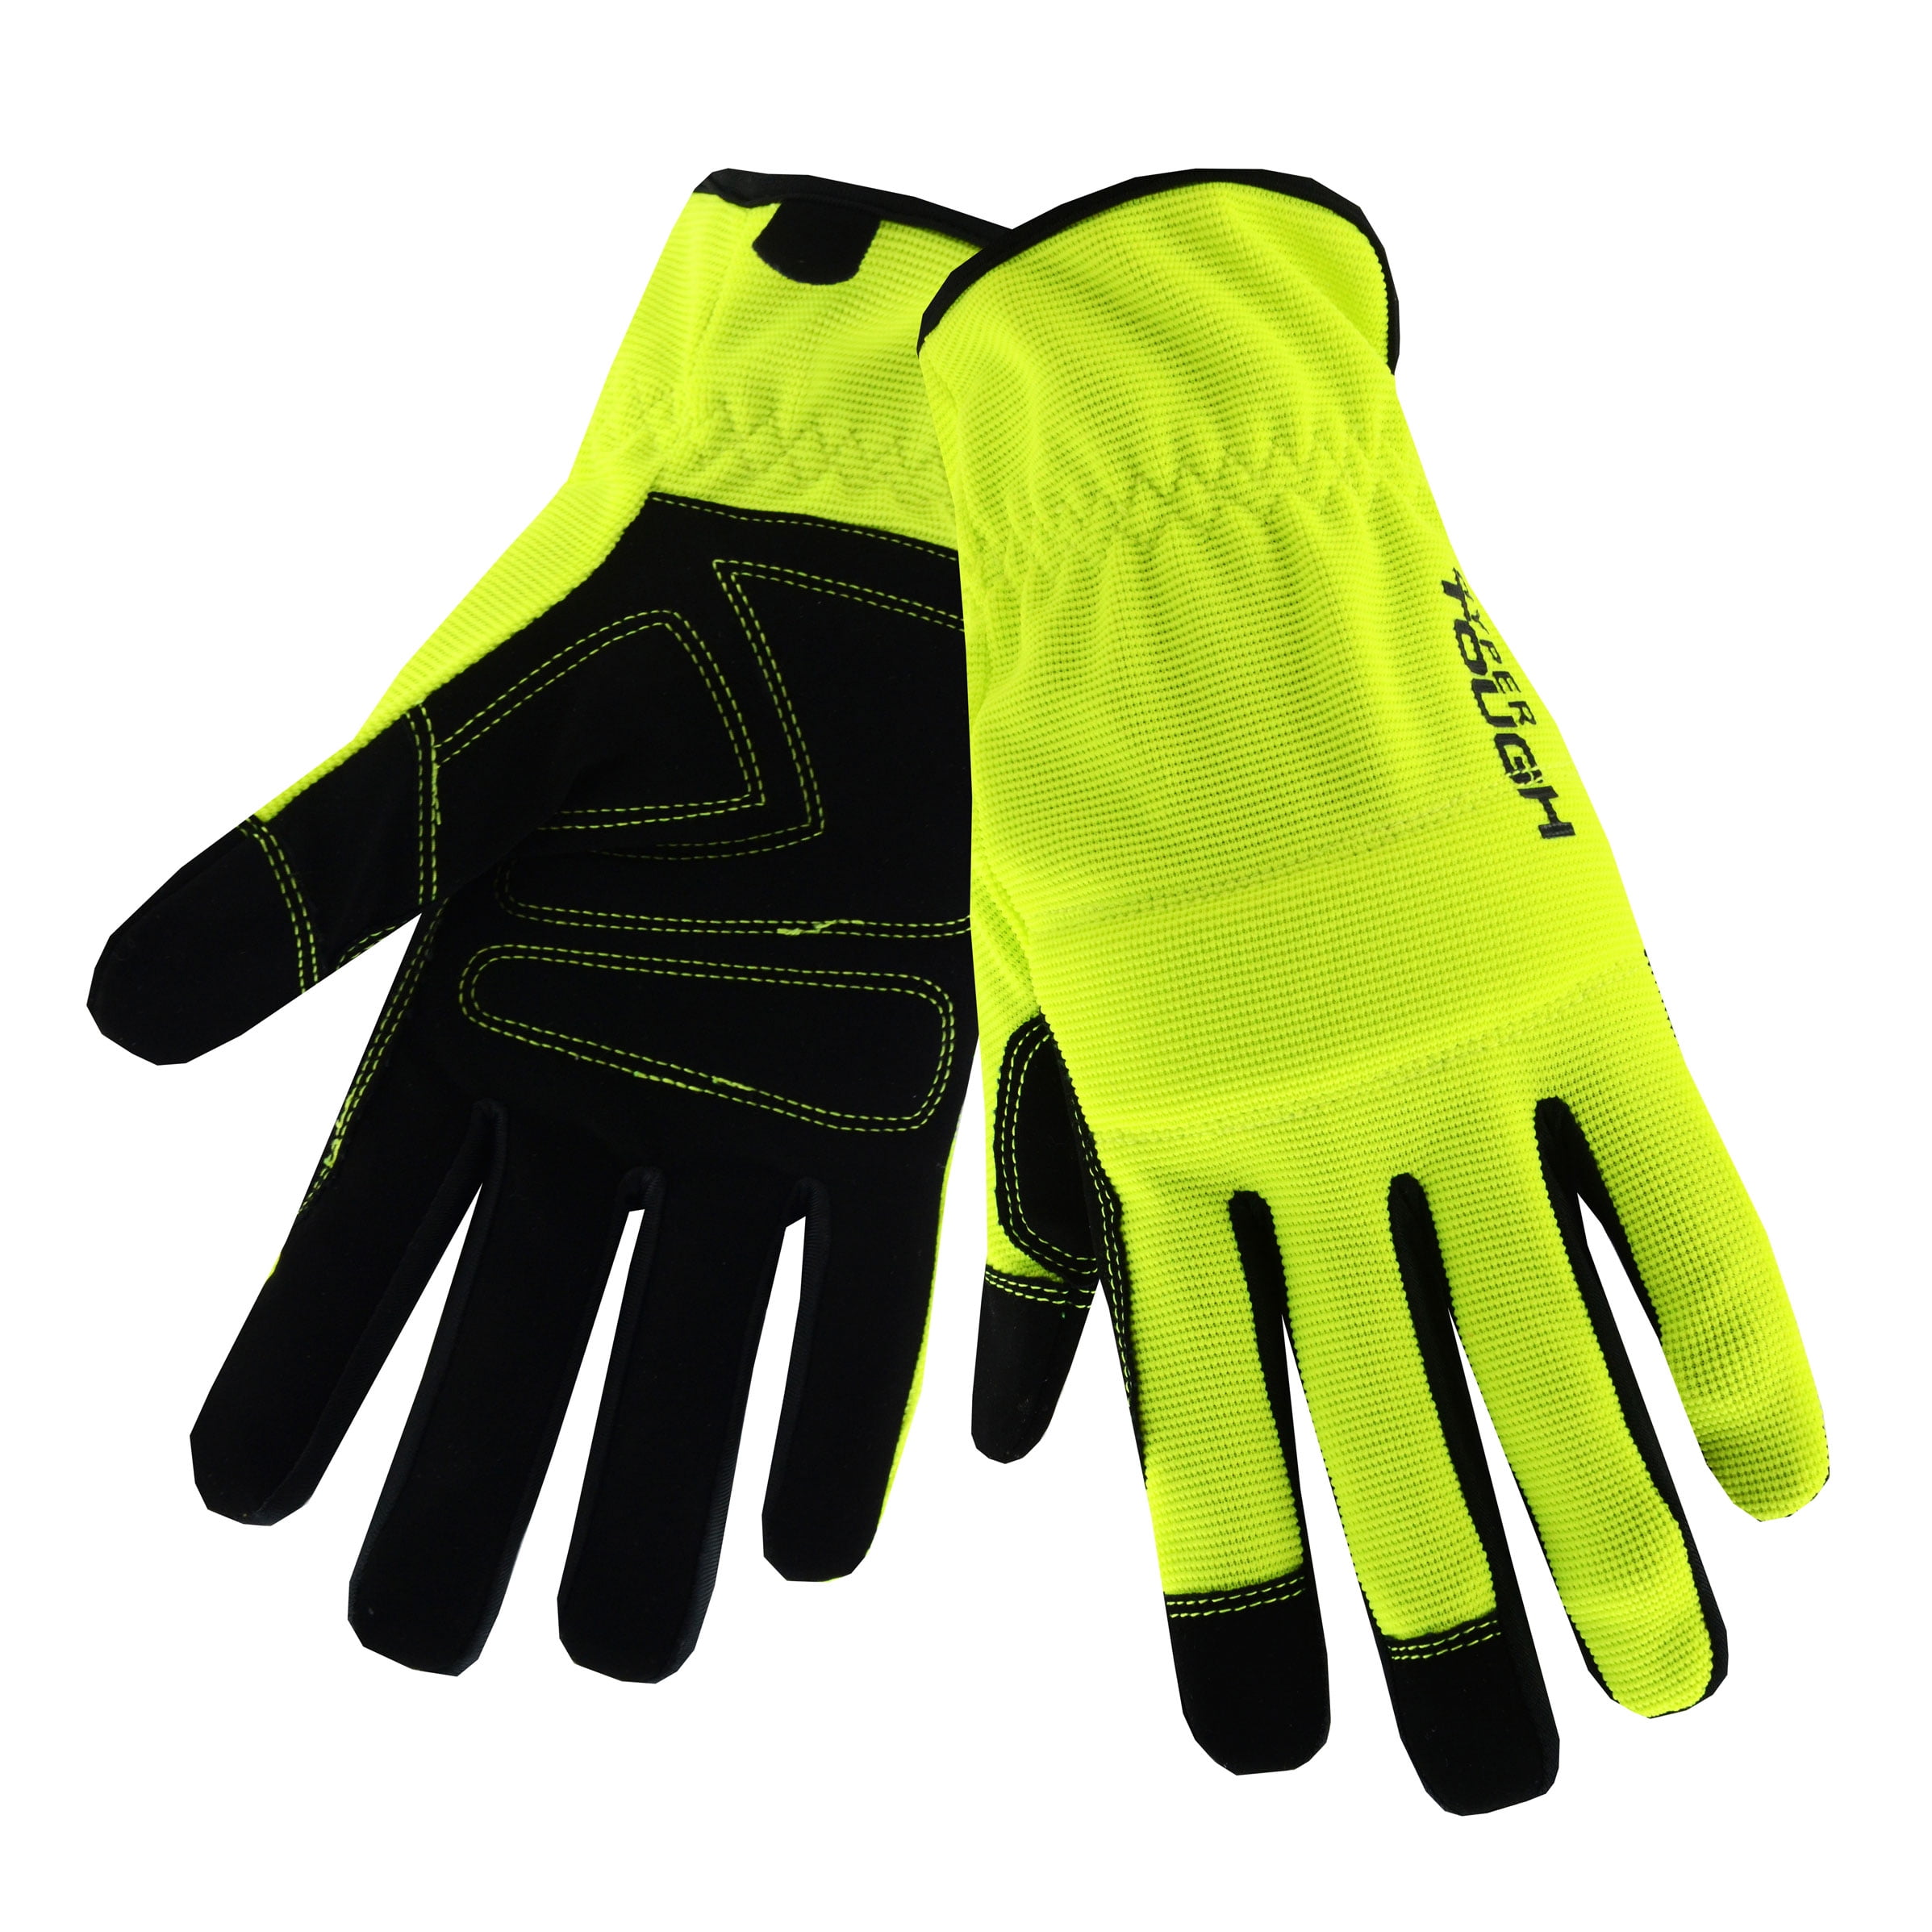 Hyper Tough High Performance Black Synthetic Leather Mechanic Gloves, Men's  Medium